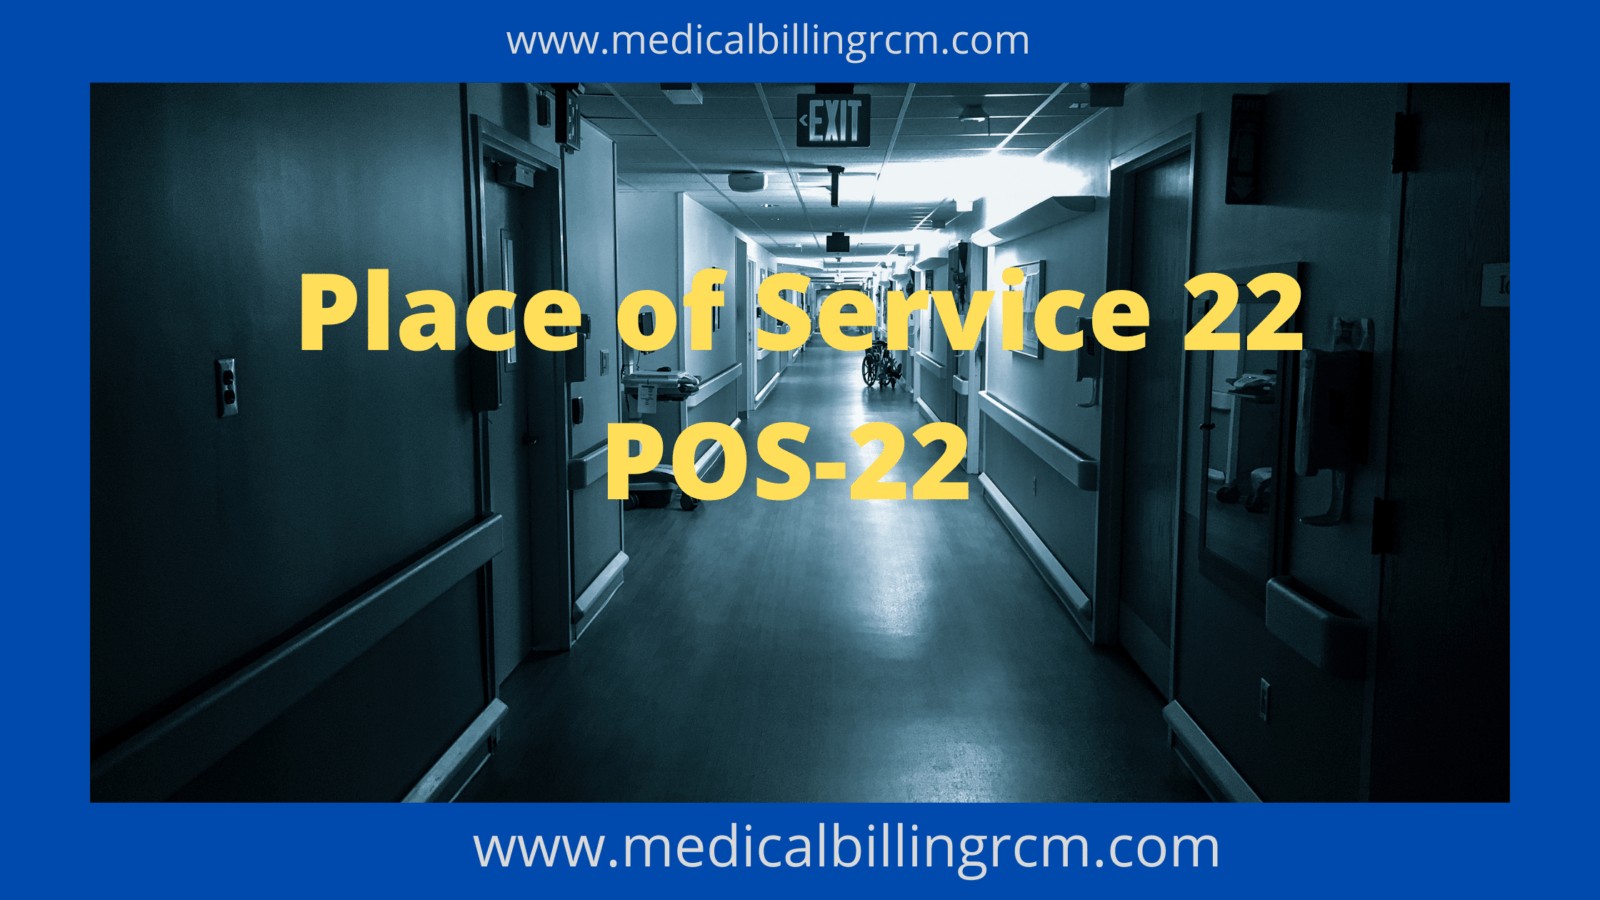 POS22 in medical billing